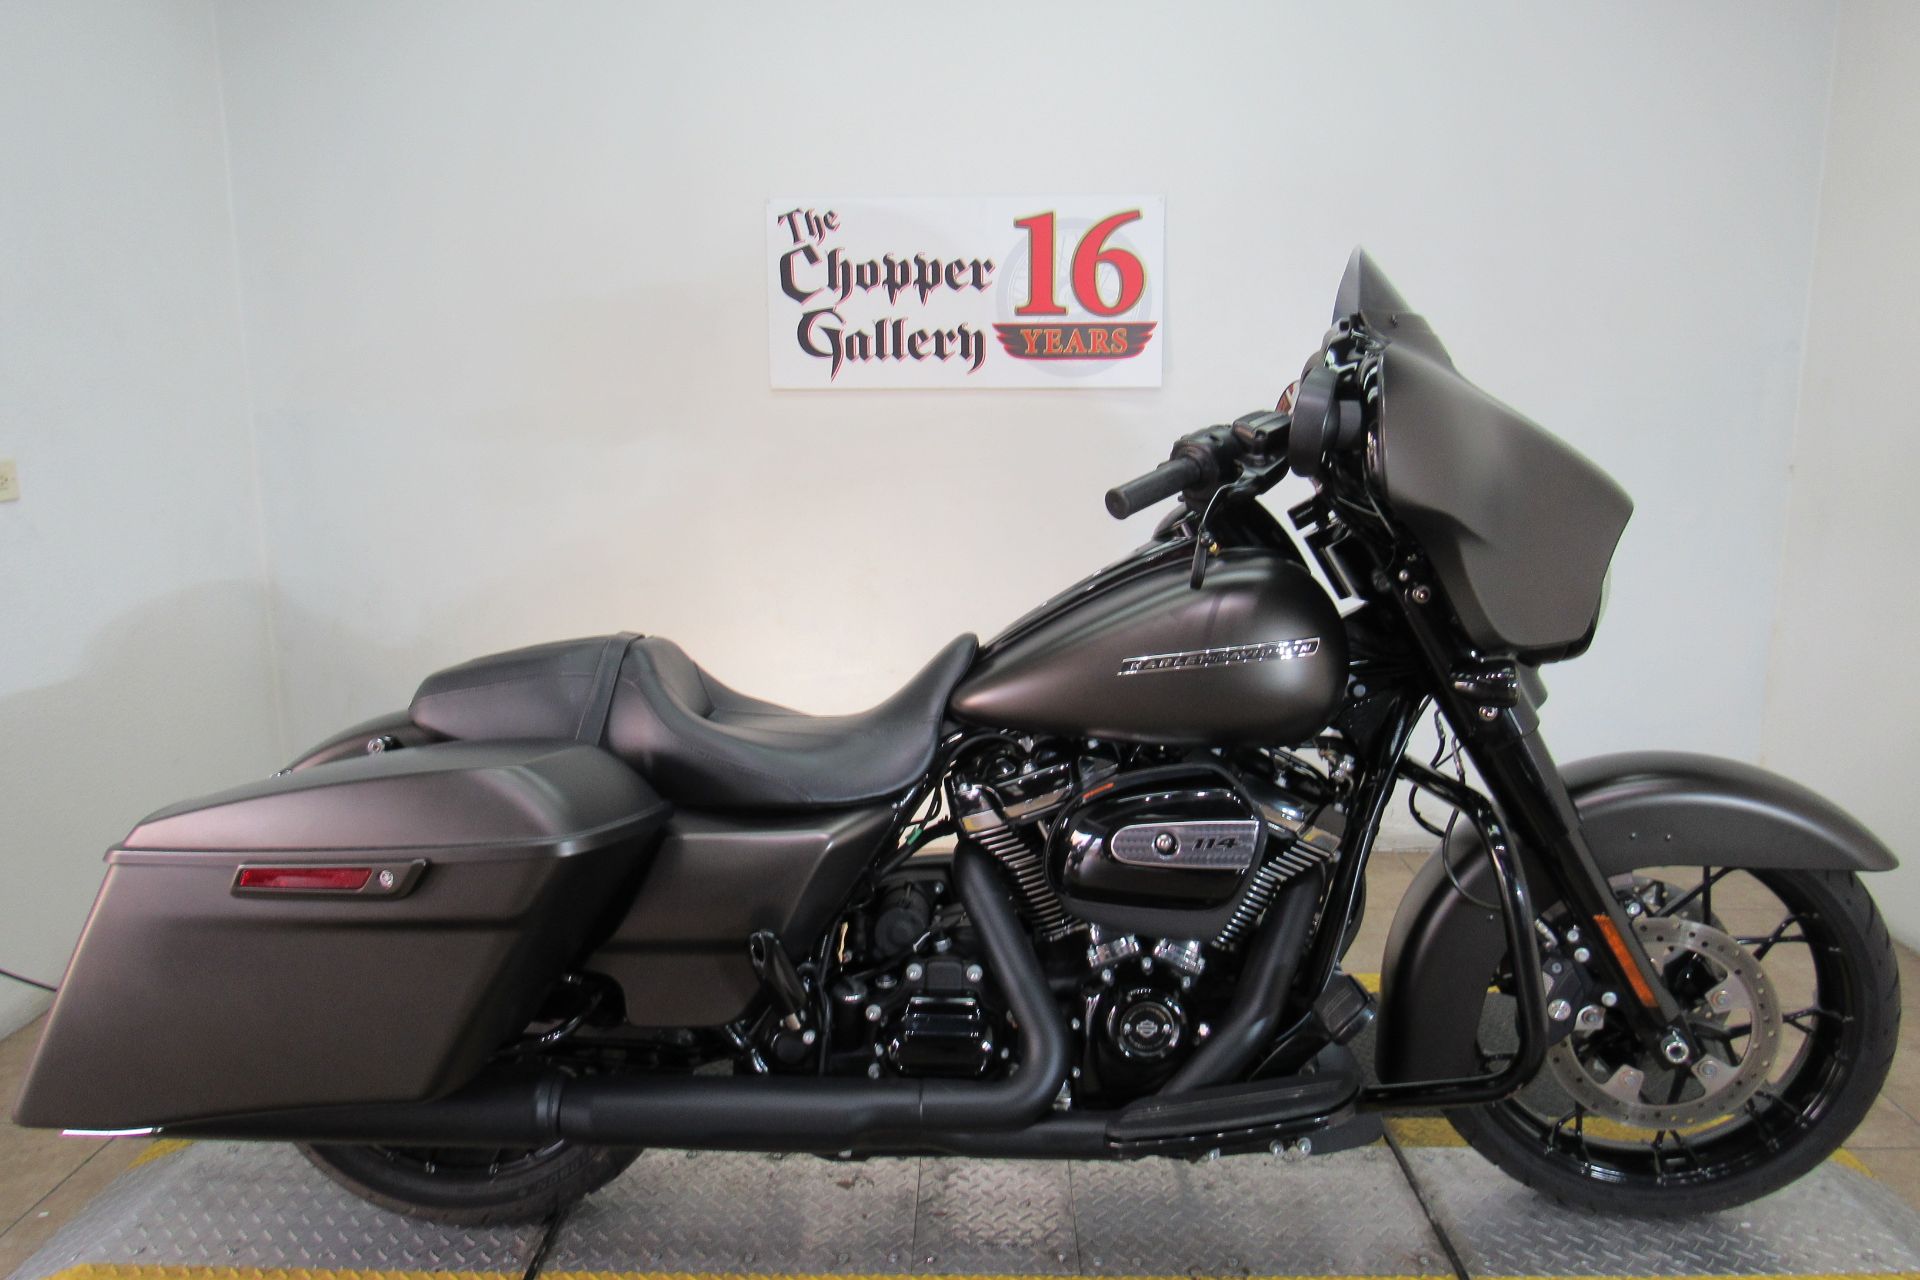 2020 Harley-Davidson Street Glide® Special in Temecula, California - Photo 1